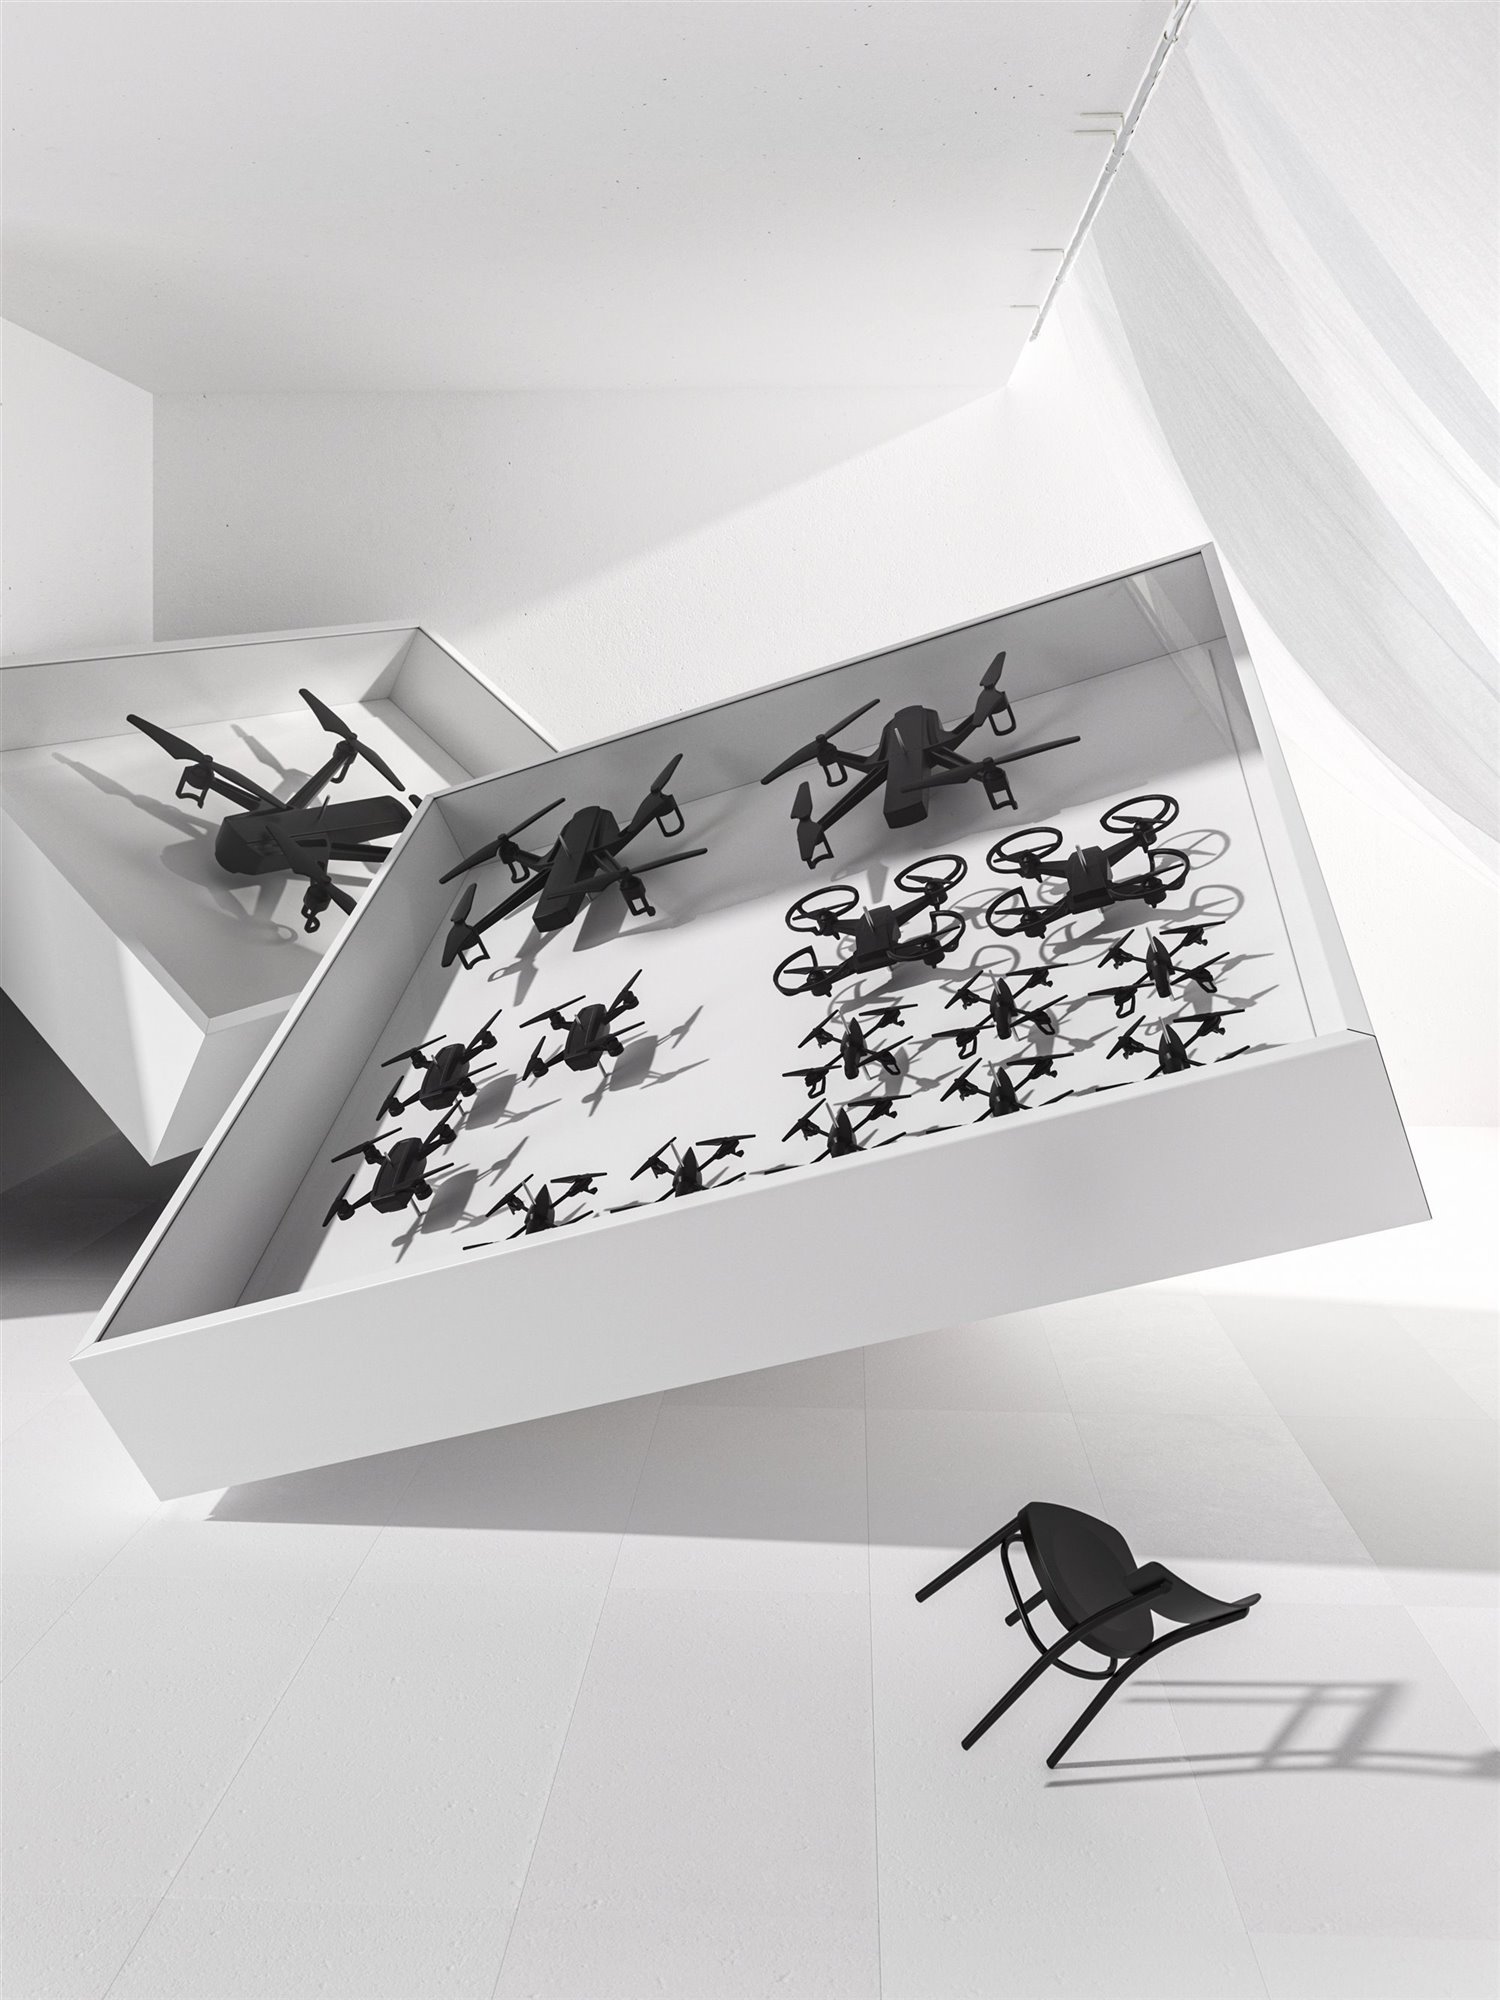 Coleccion Ikea Art event 2021 cuadro para decorar la pared con drones